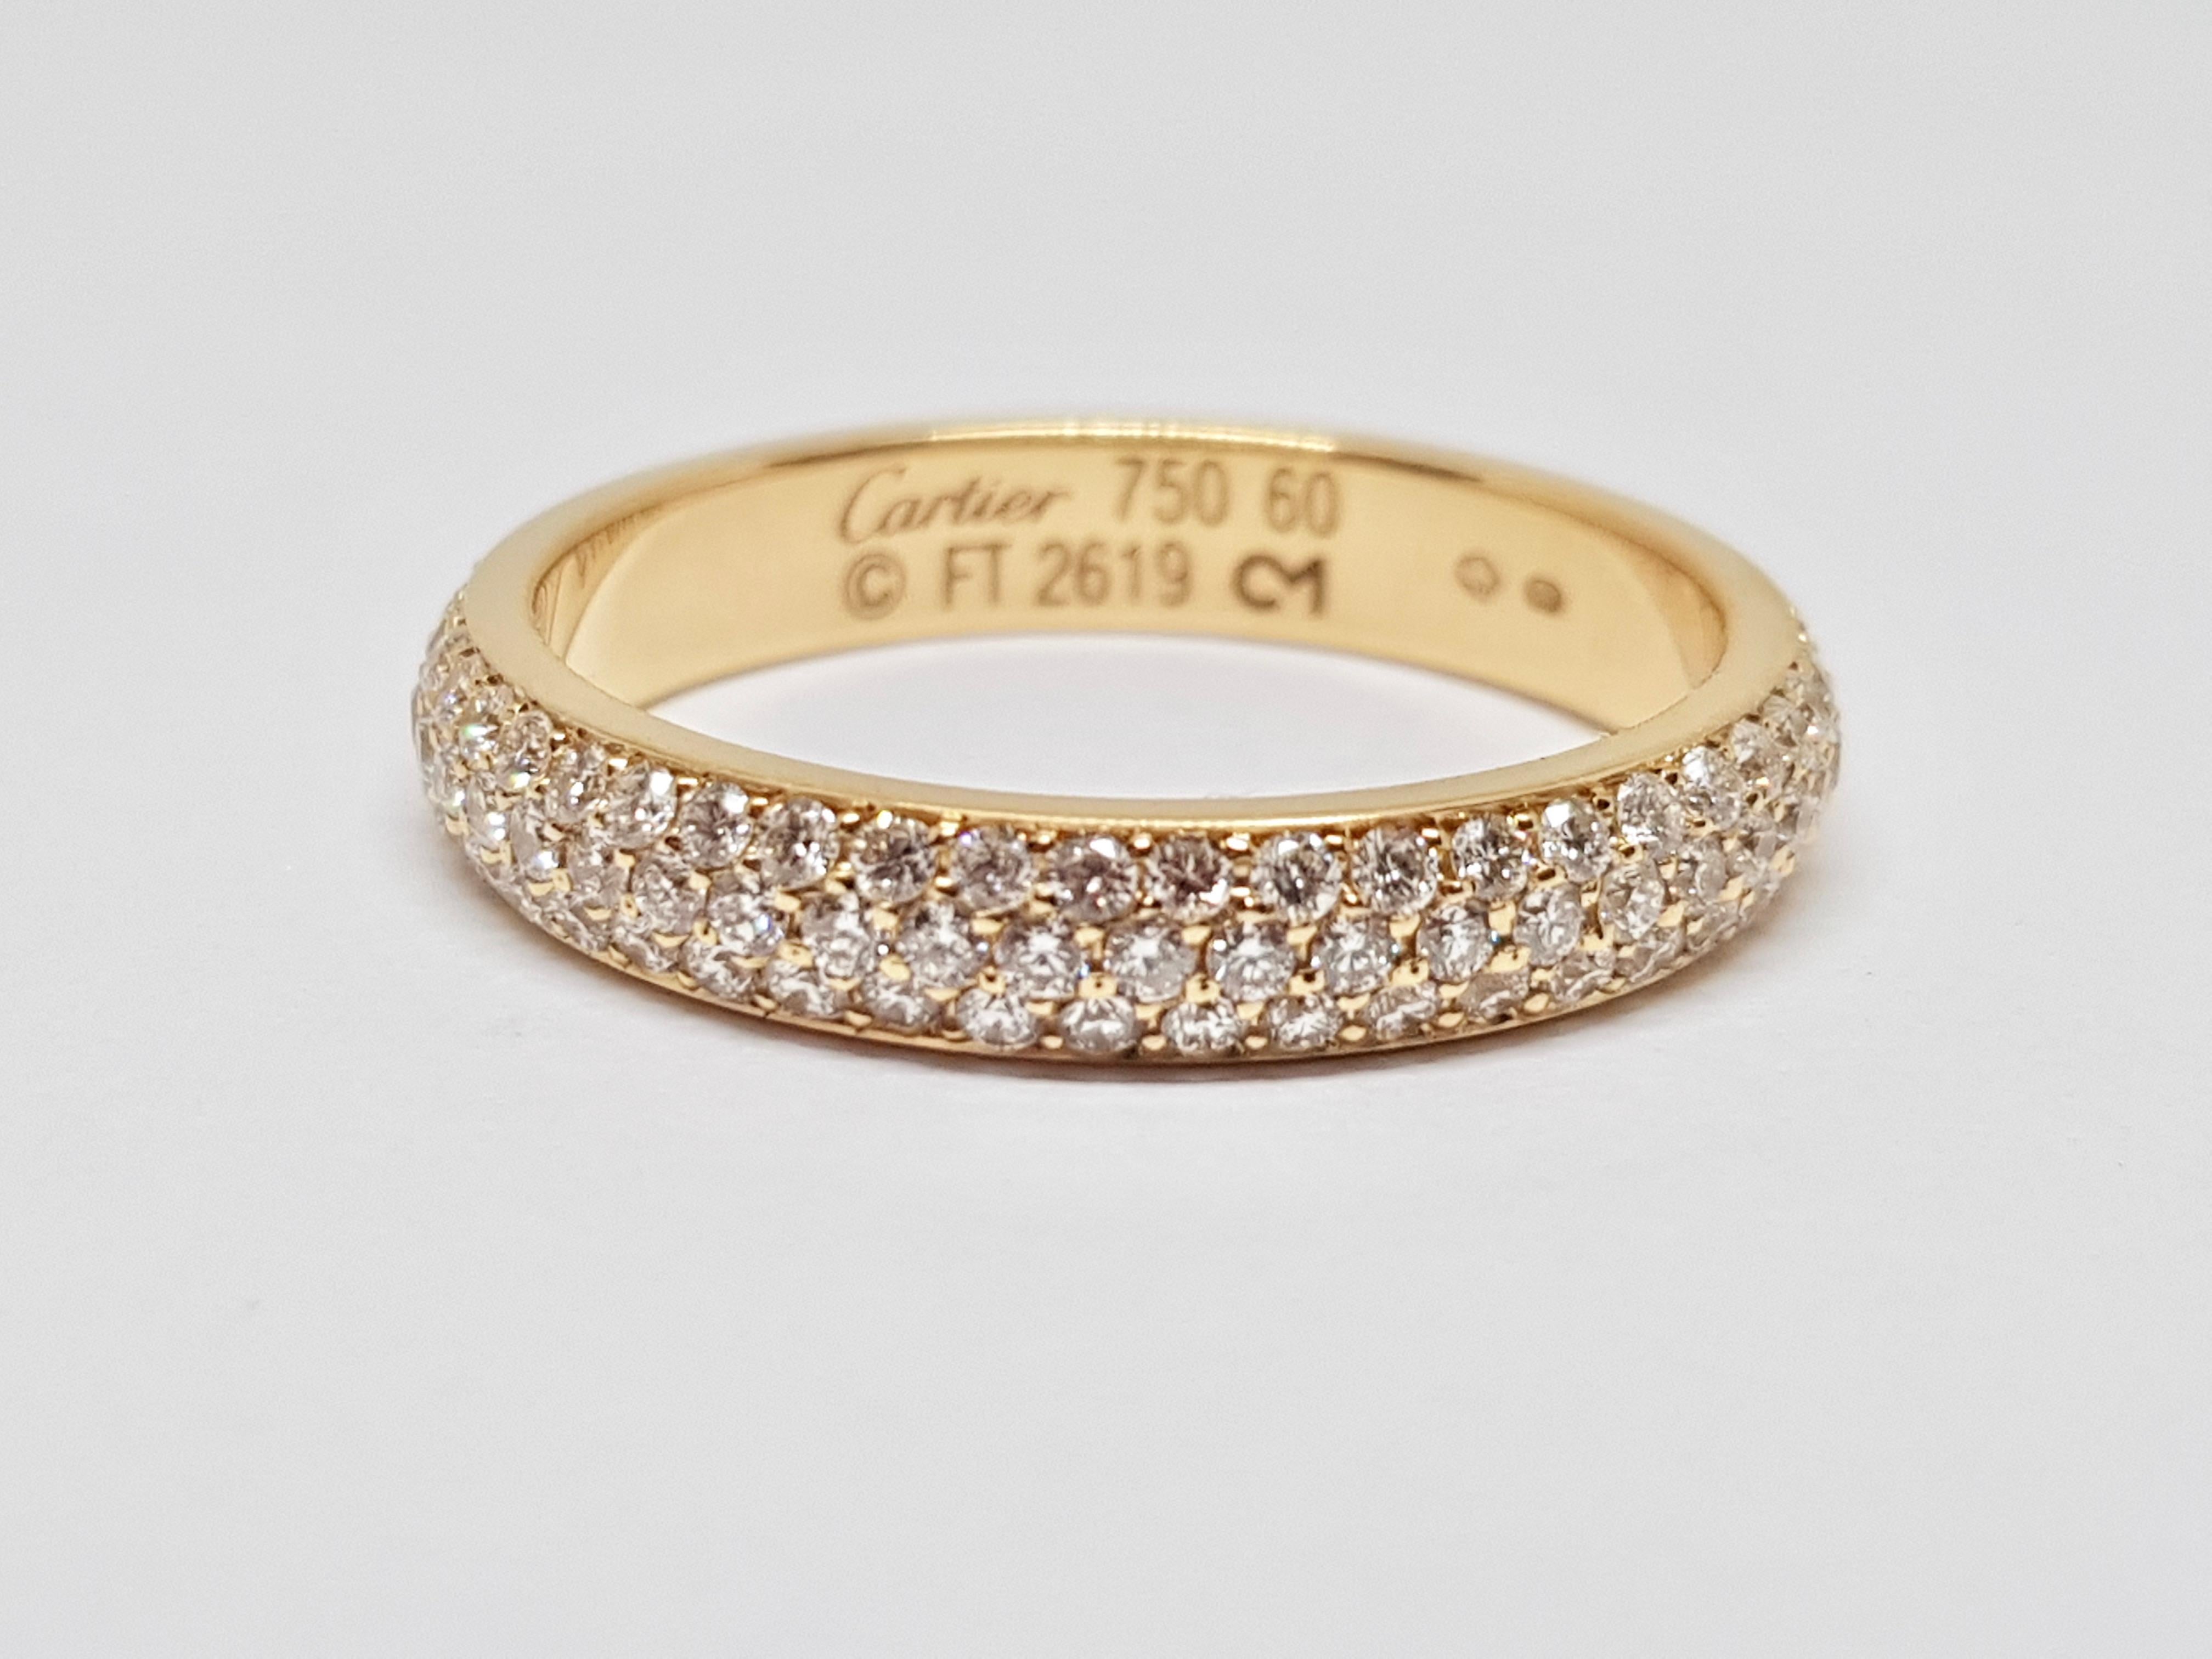 Contemporary Cartier Diamond Band Ring Yellow Gold 1.38 Carat